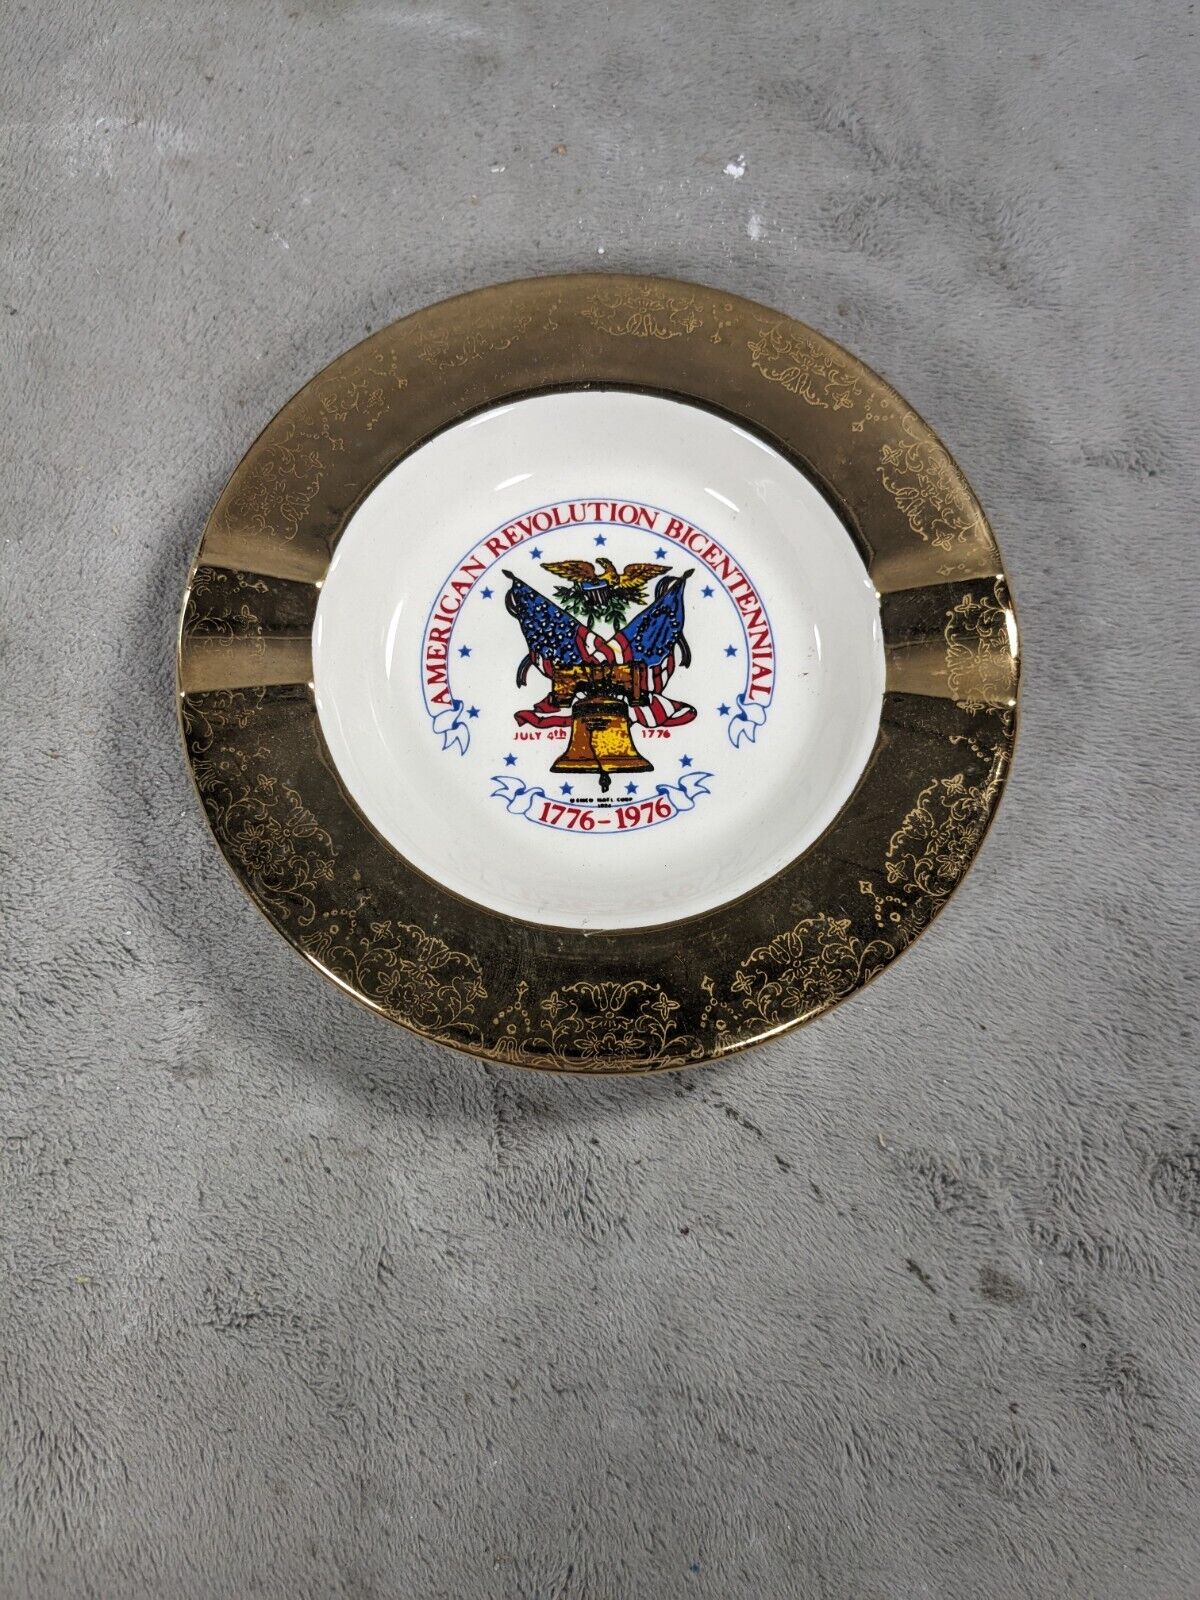 American Revolution Bicentennial Decorative Plates 1776-1976